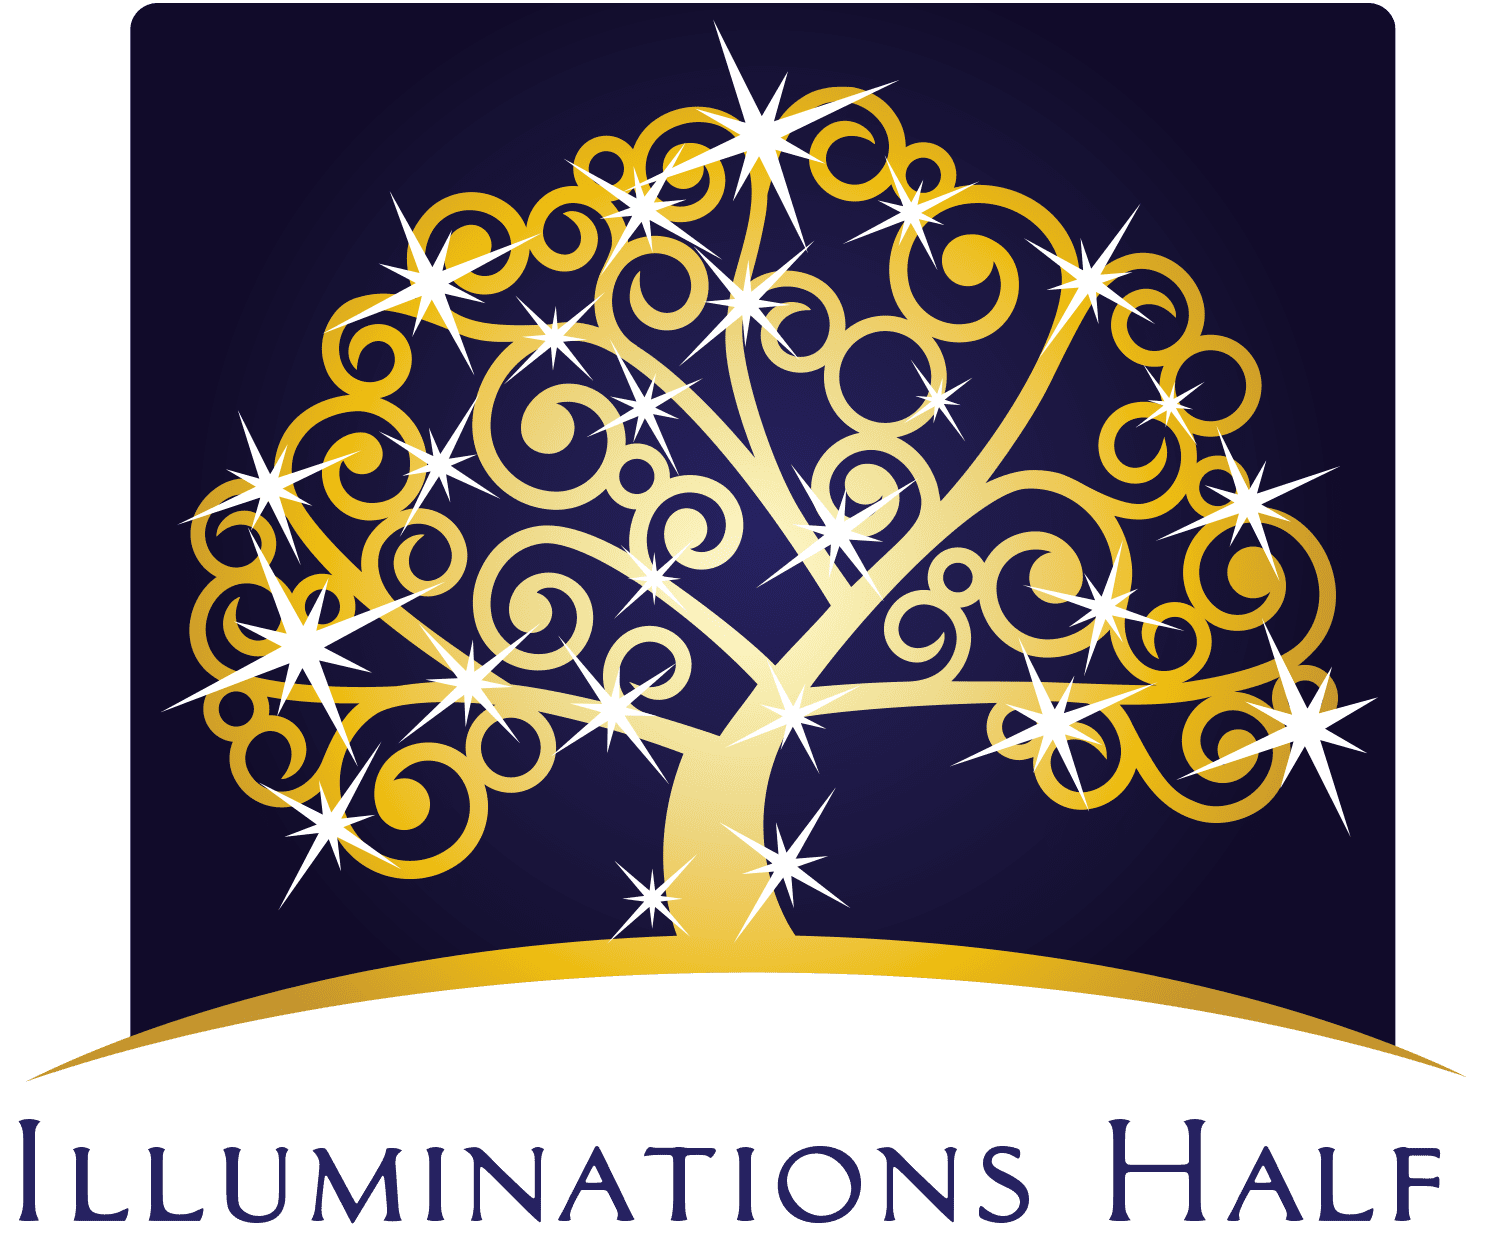 Illuminations Night Time Half – Austin logo on RaceRaves